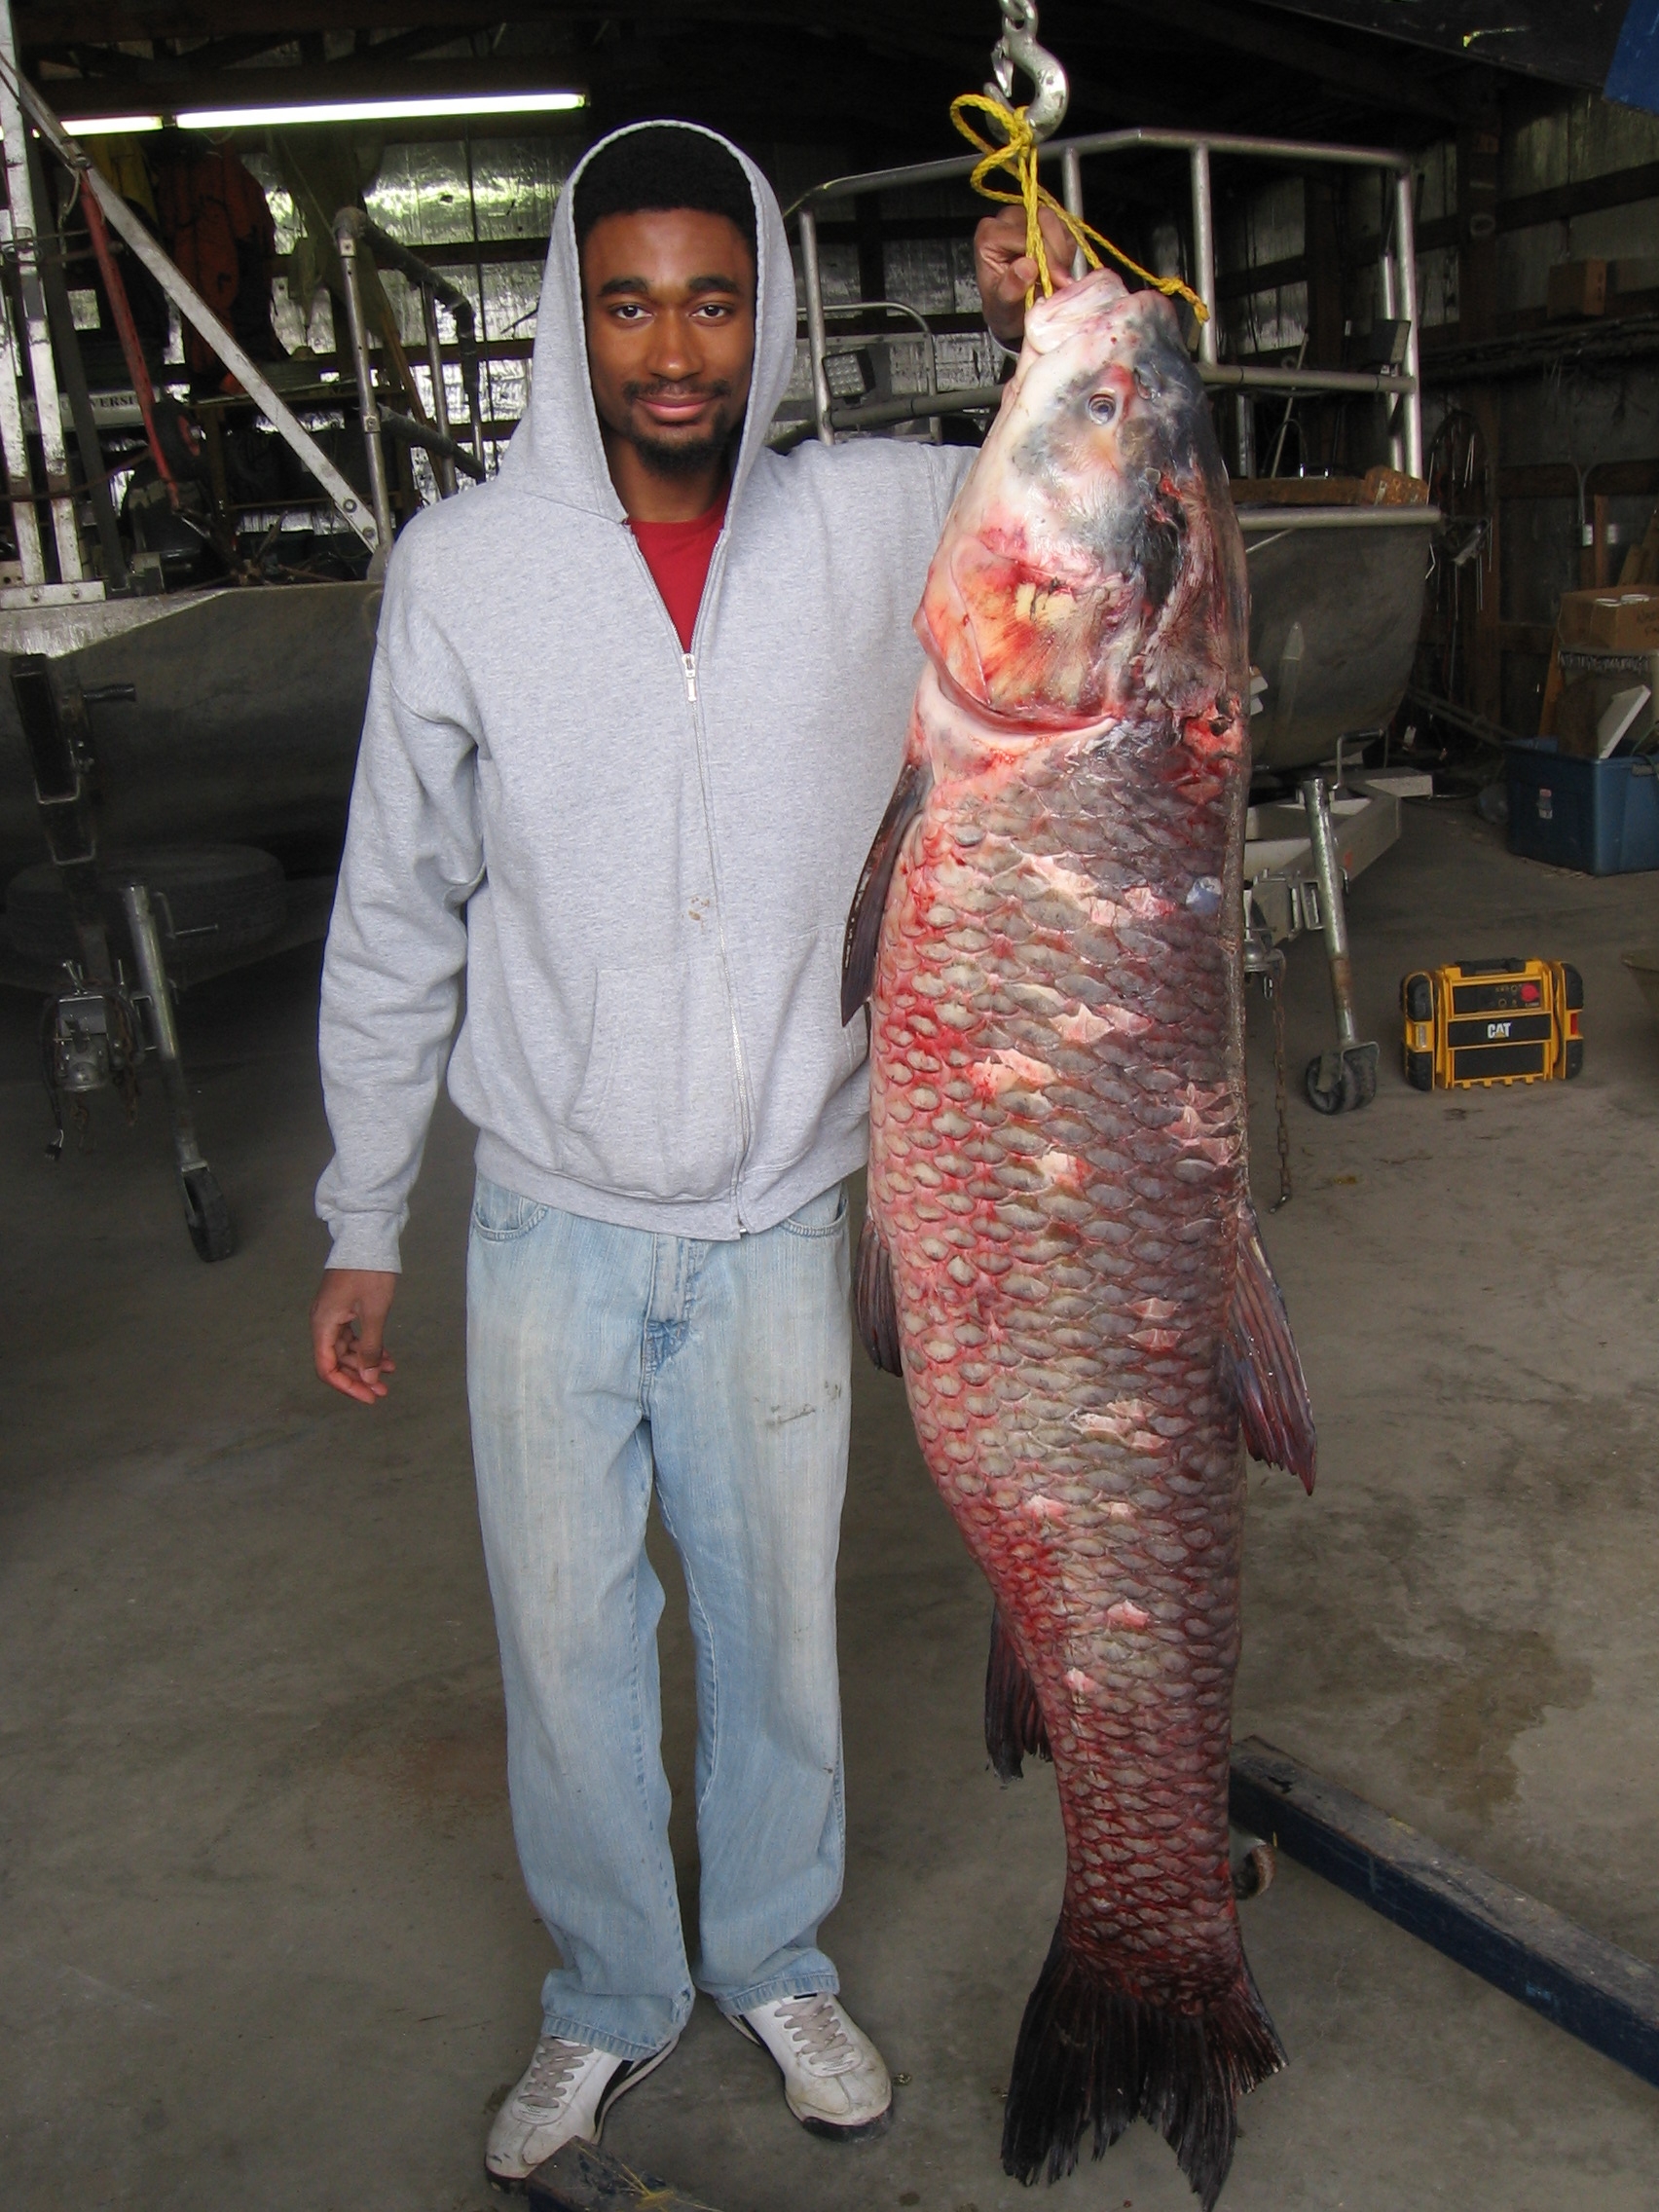 SIU receives 115-pound black carp specimen for invasive species study